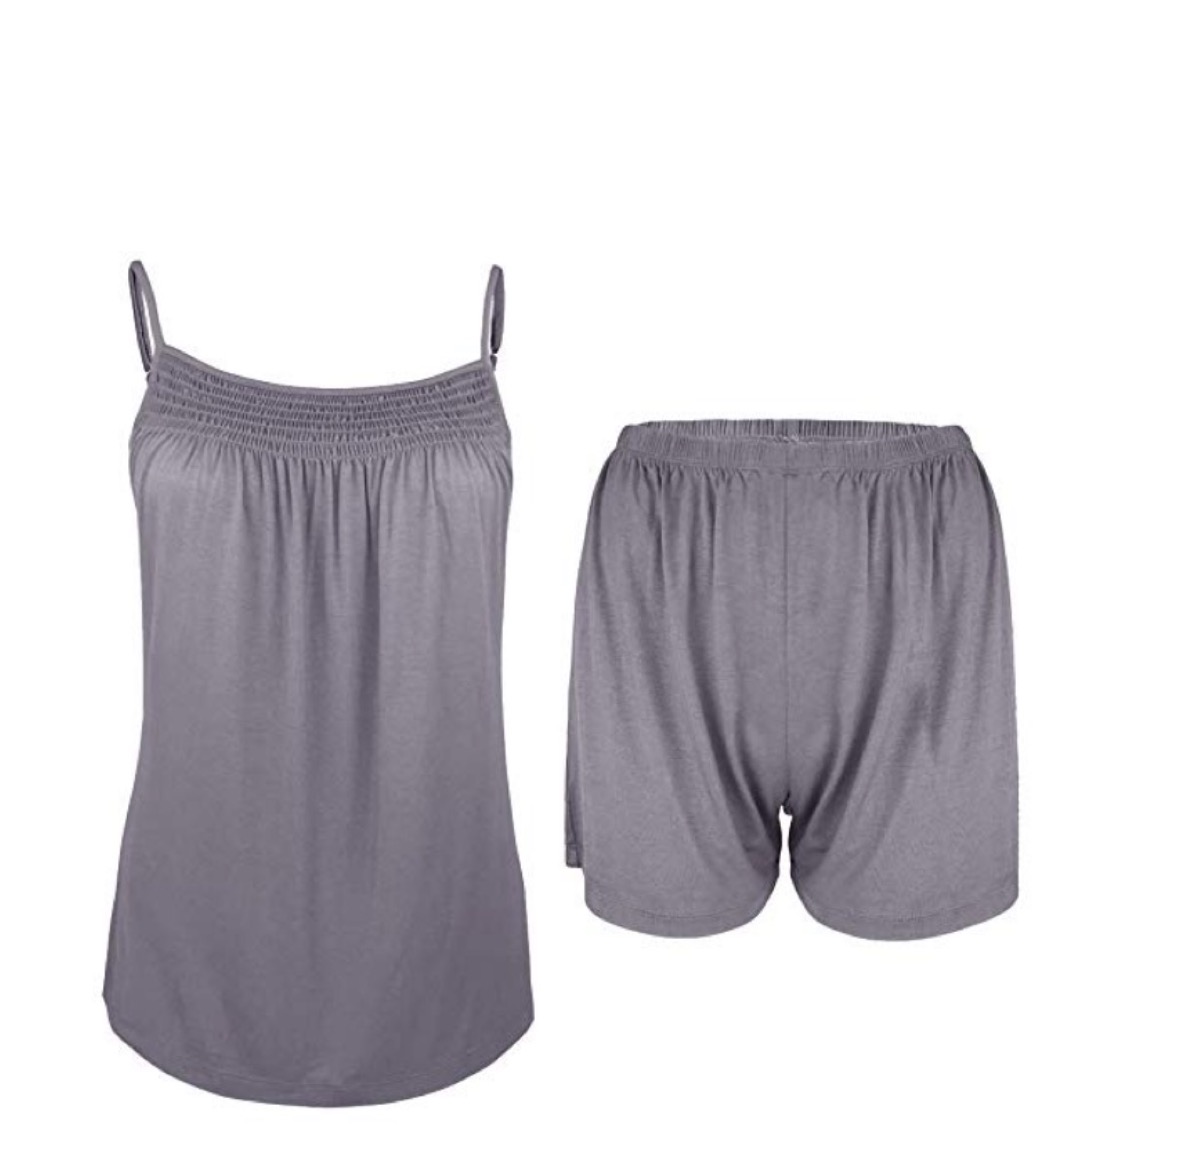 short gray pajama set, cooling products